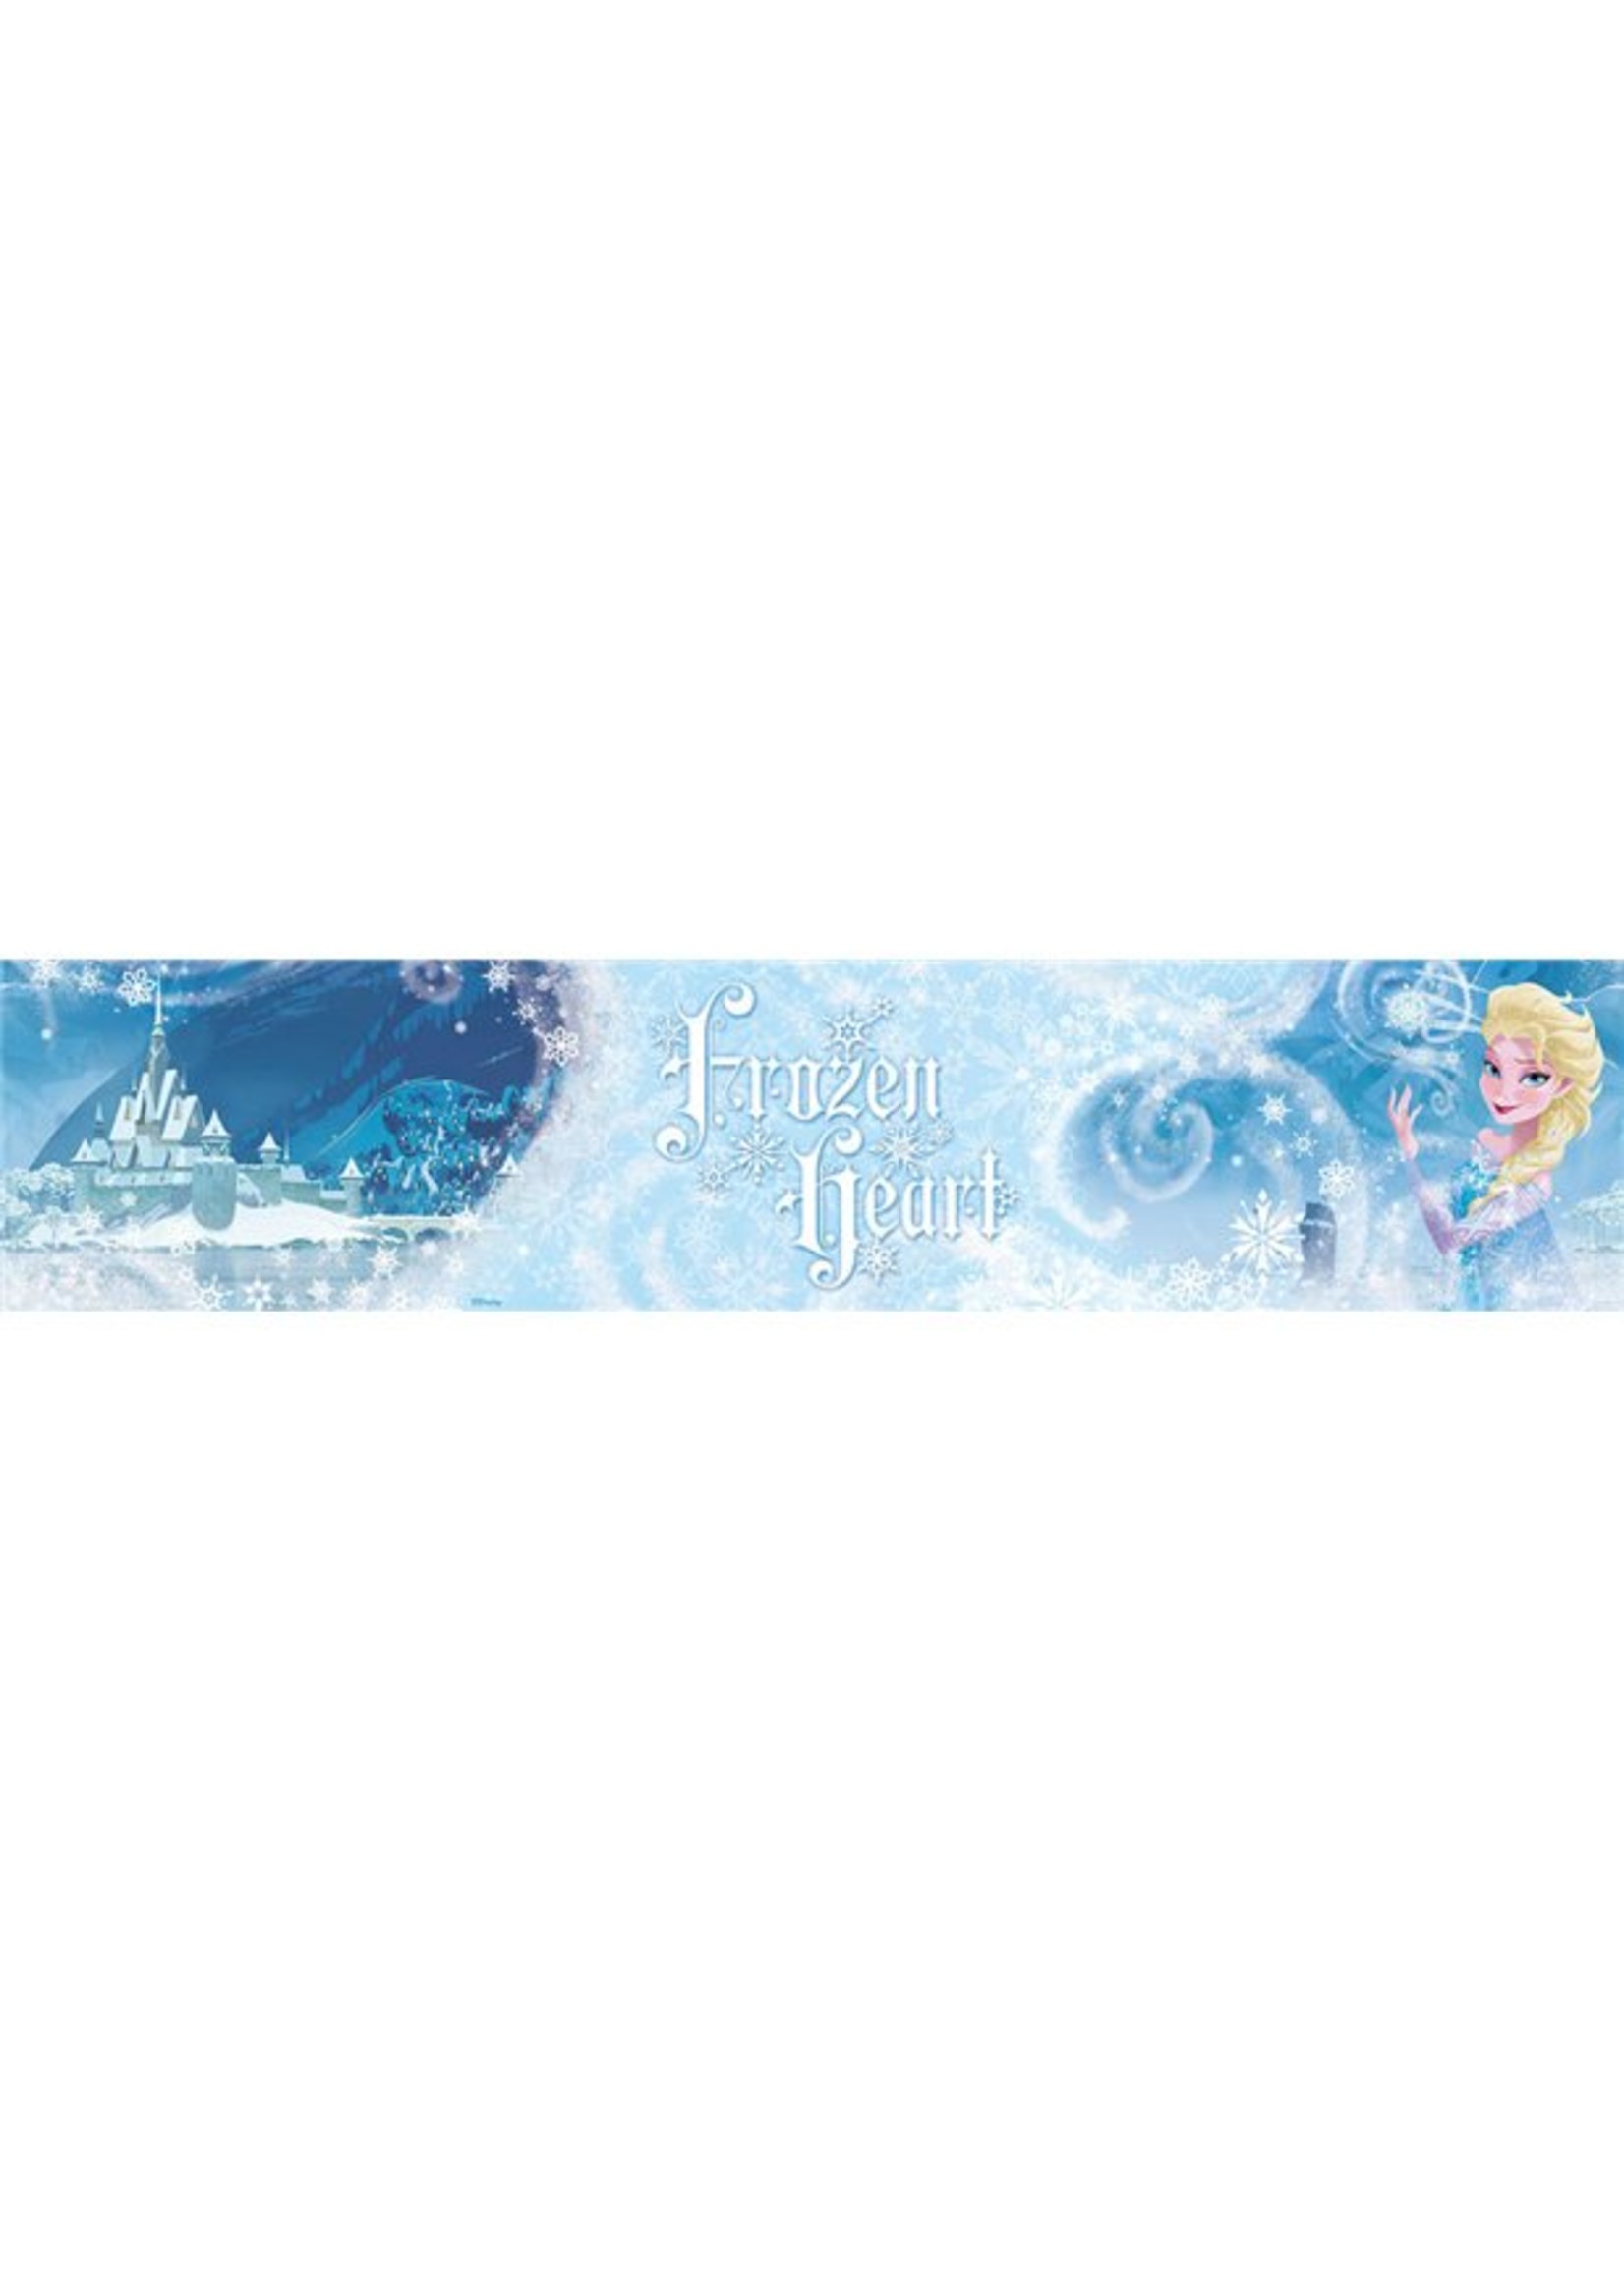 Disney Frozen Frozen Wall Border Elsa